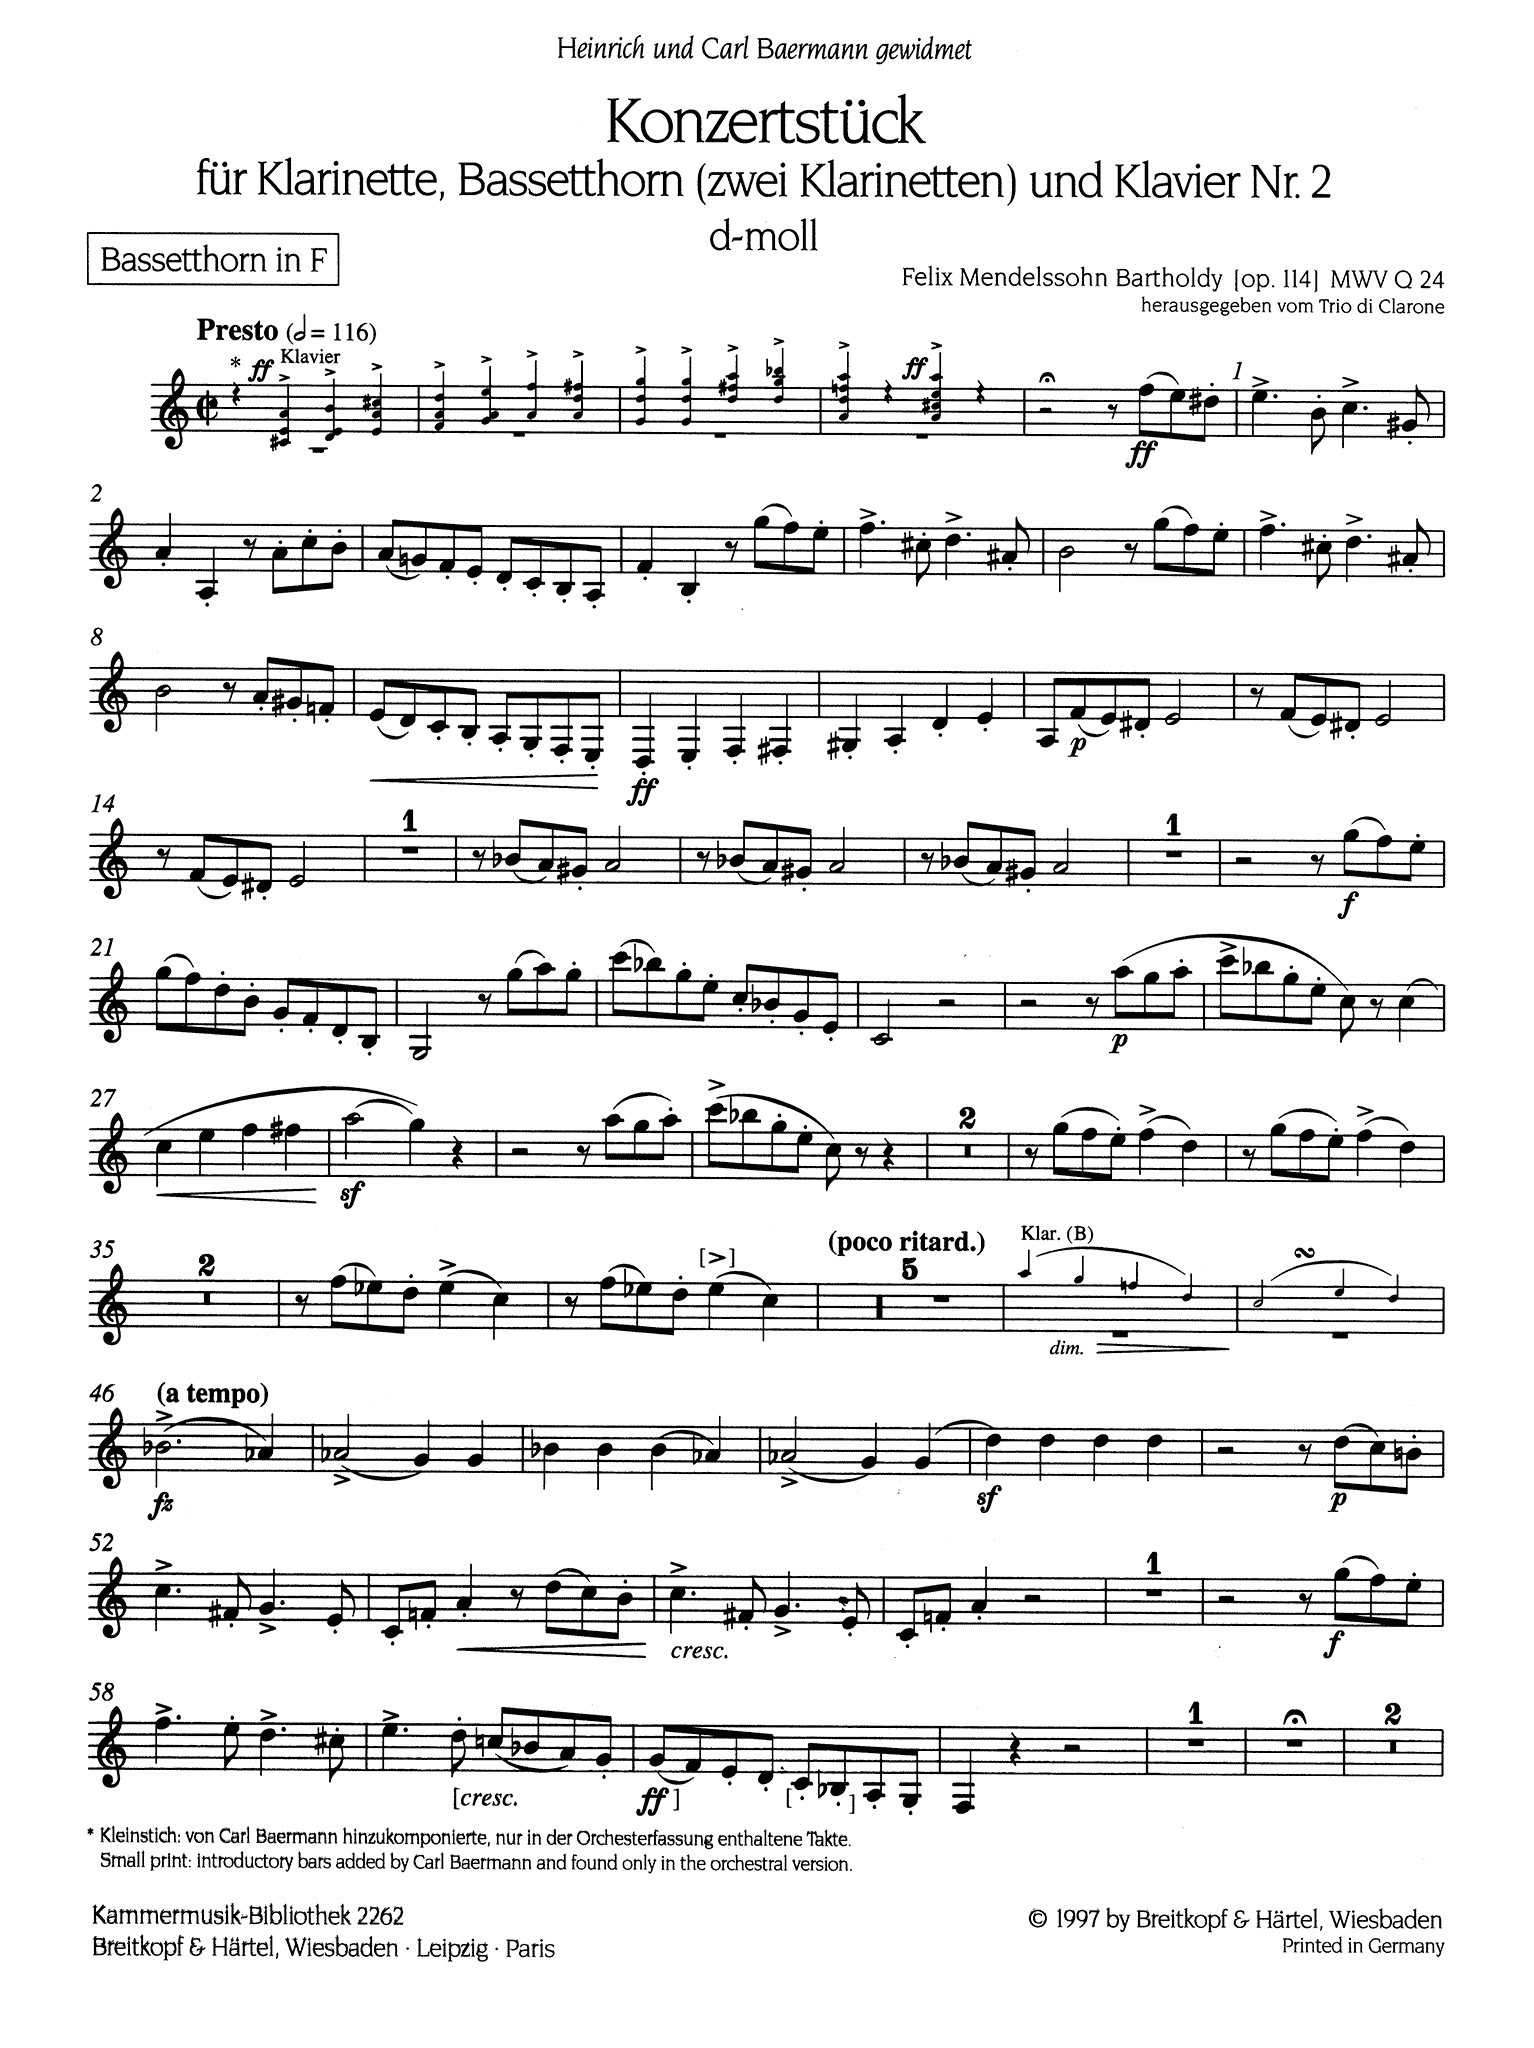 Concertpiece No. 2 in D Minor, Op. 114 Basset Horn solo part